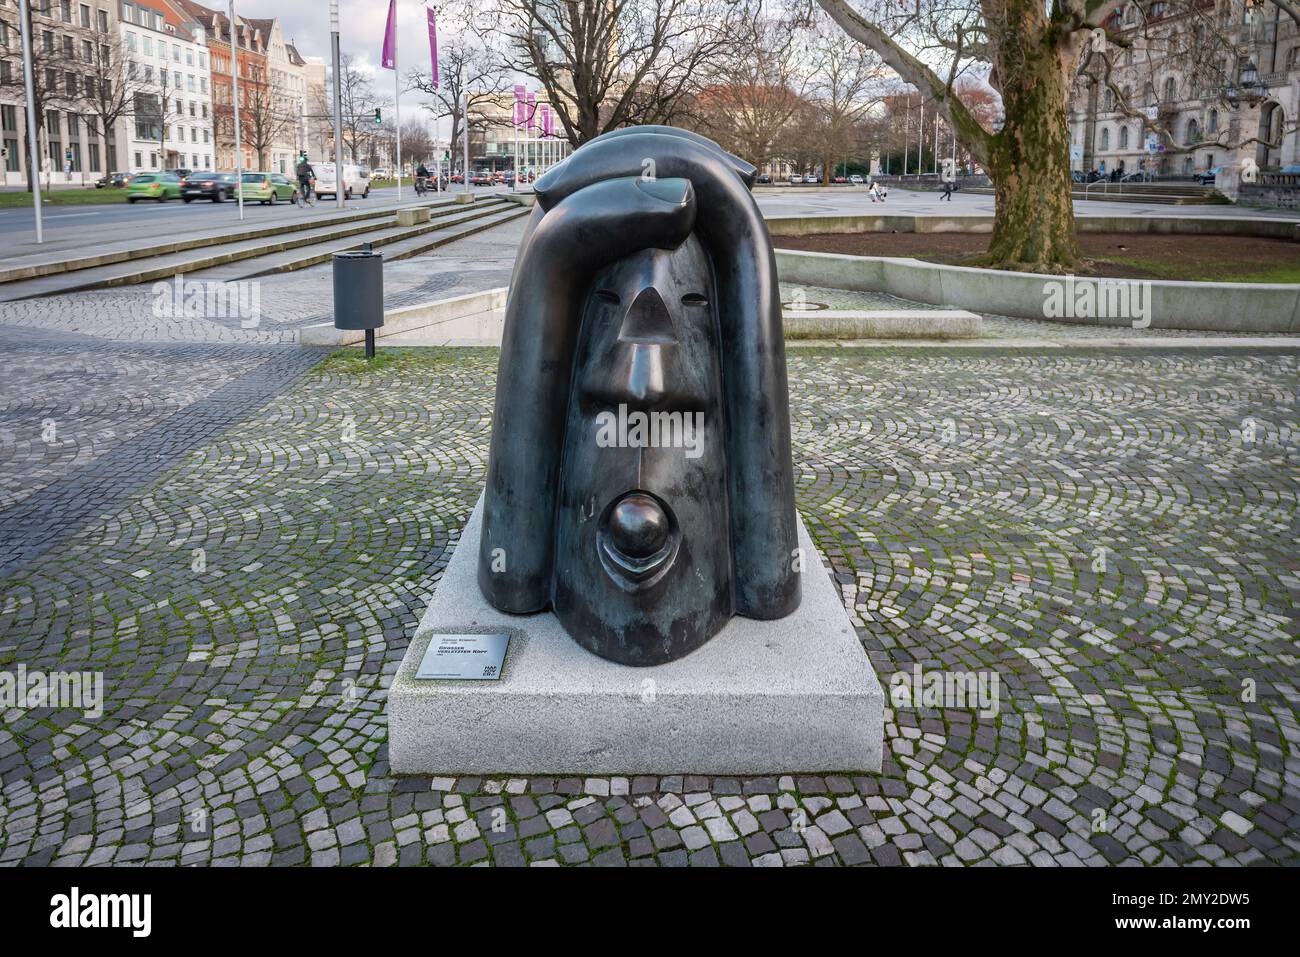 Grosser verletzter Kopf (Big injured head) Sculpture by Rainer Kriester - Hanover, Lower Saxony, Germany Stock Photo